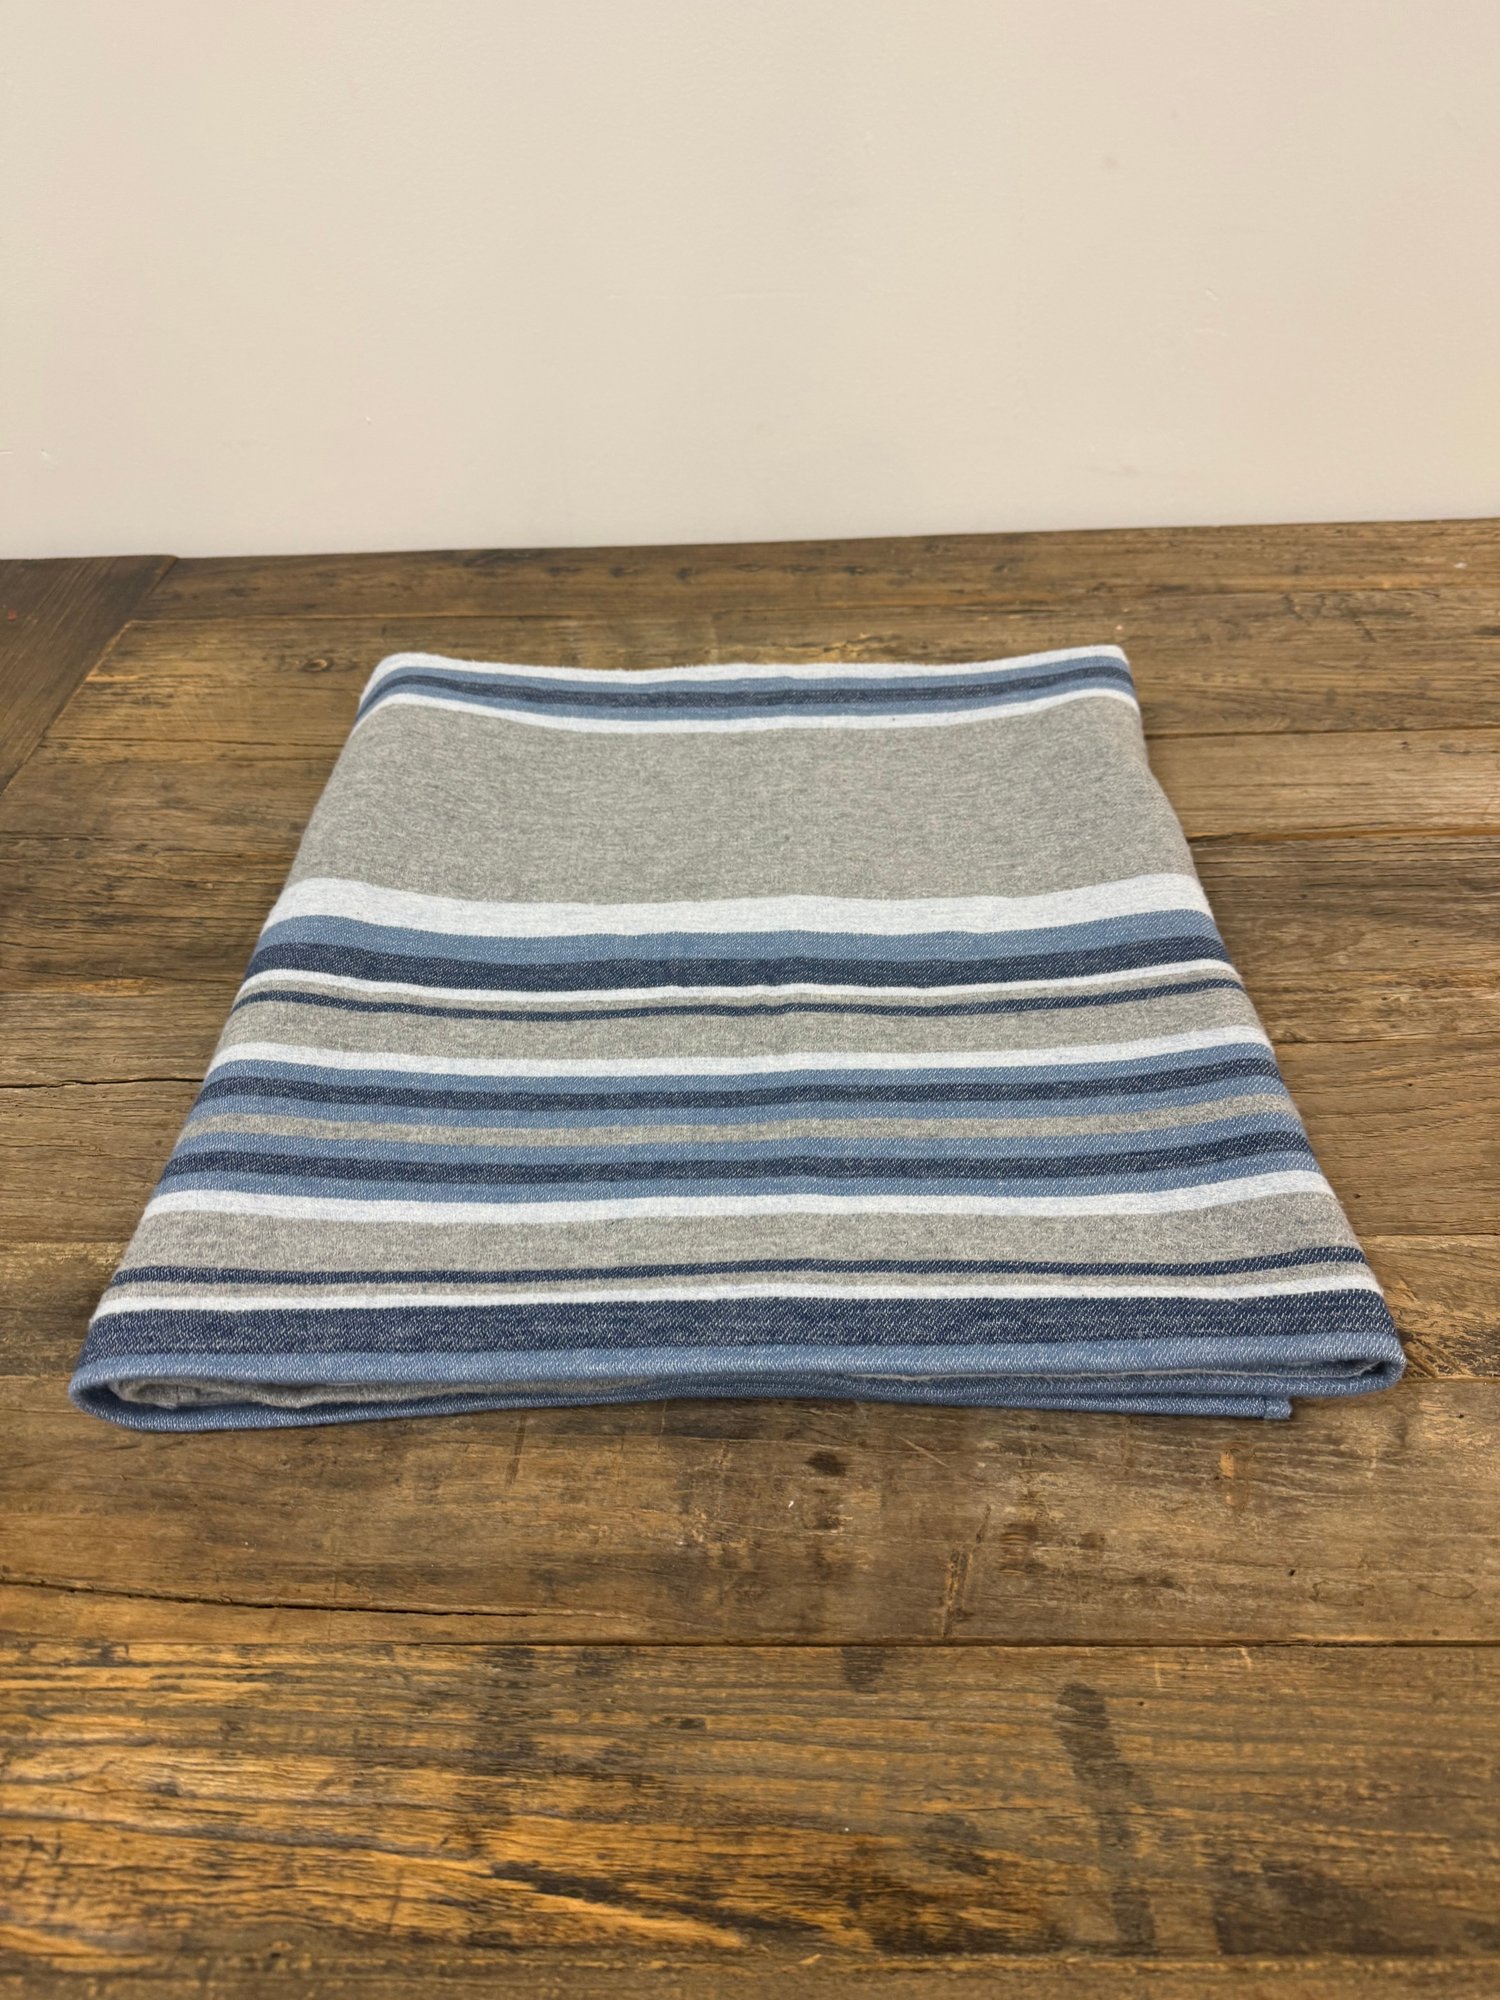 Blue And Grey Faherty Blanket Throw #4442 | Auctionninja.com